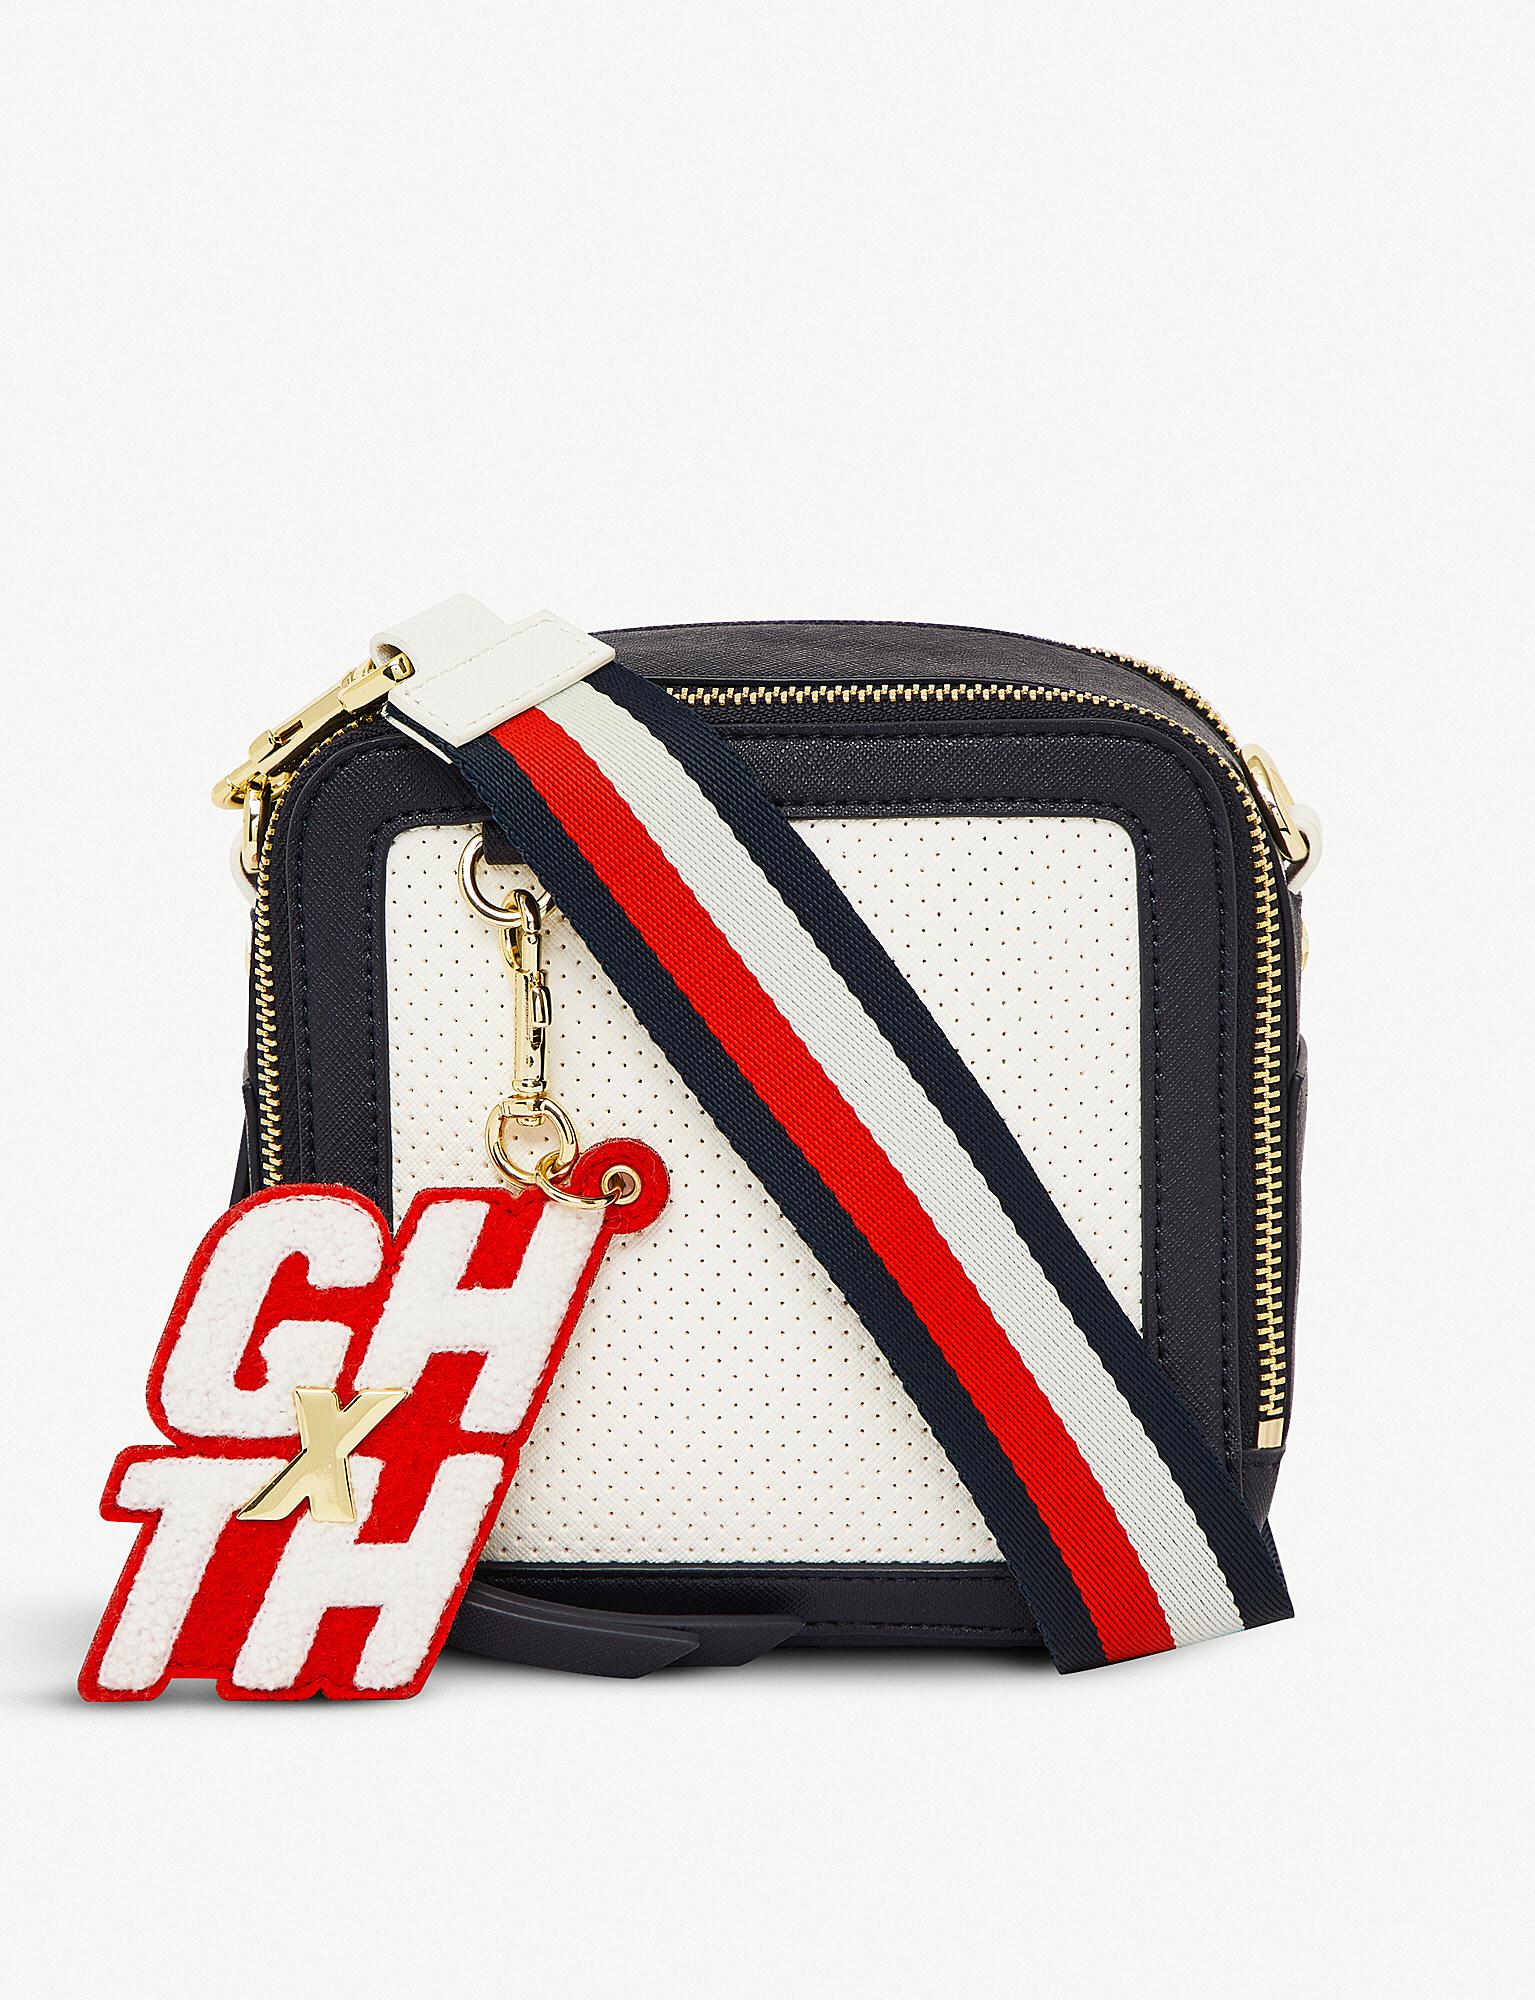 Tommy Hilfiger X Gigi Hadid Backpack